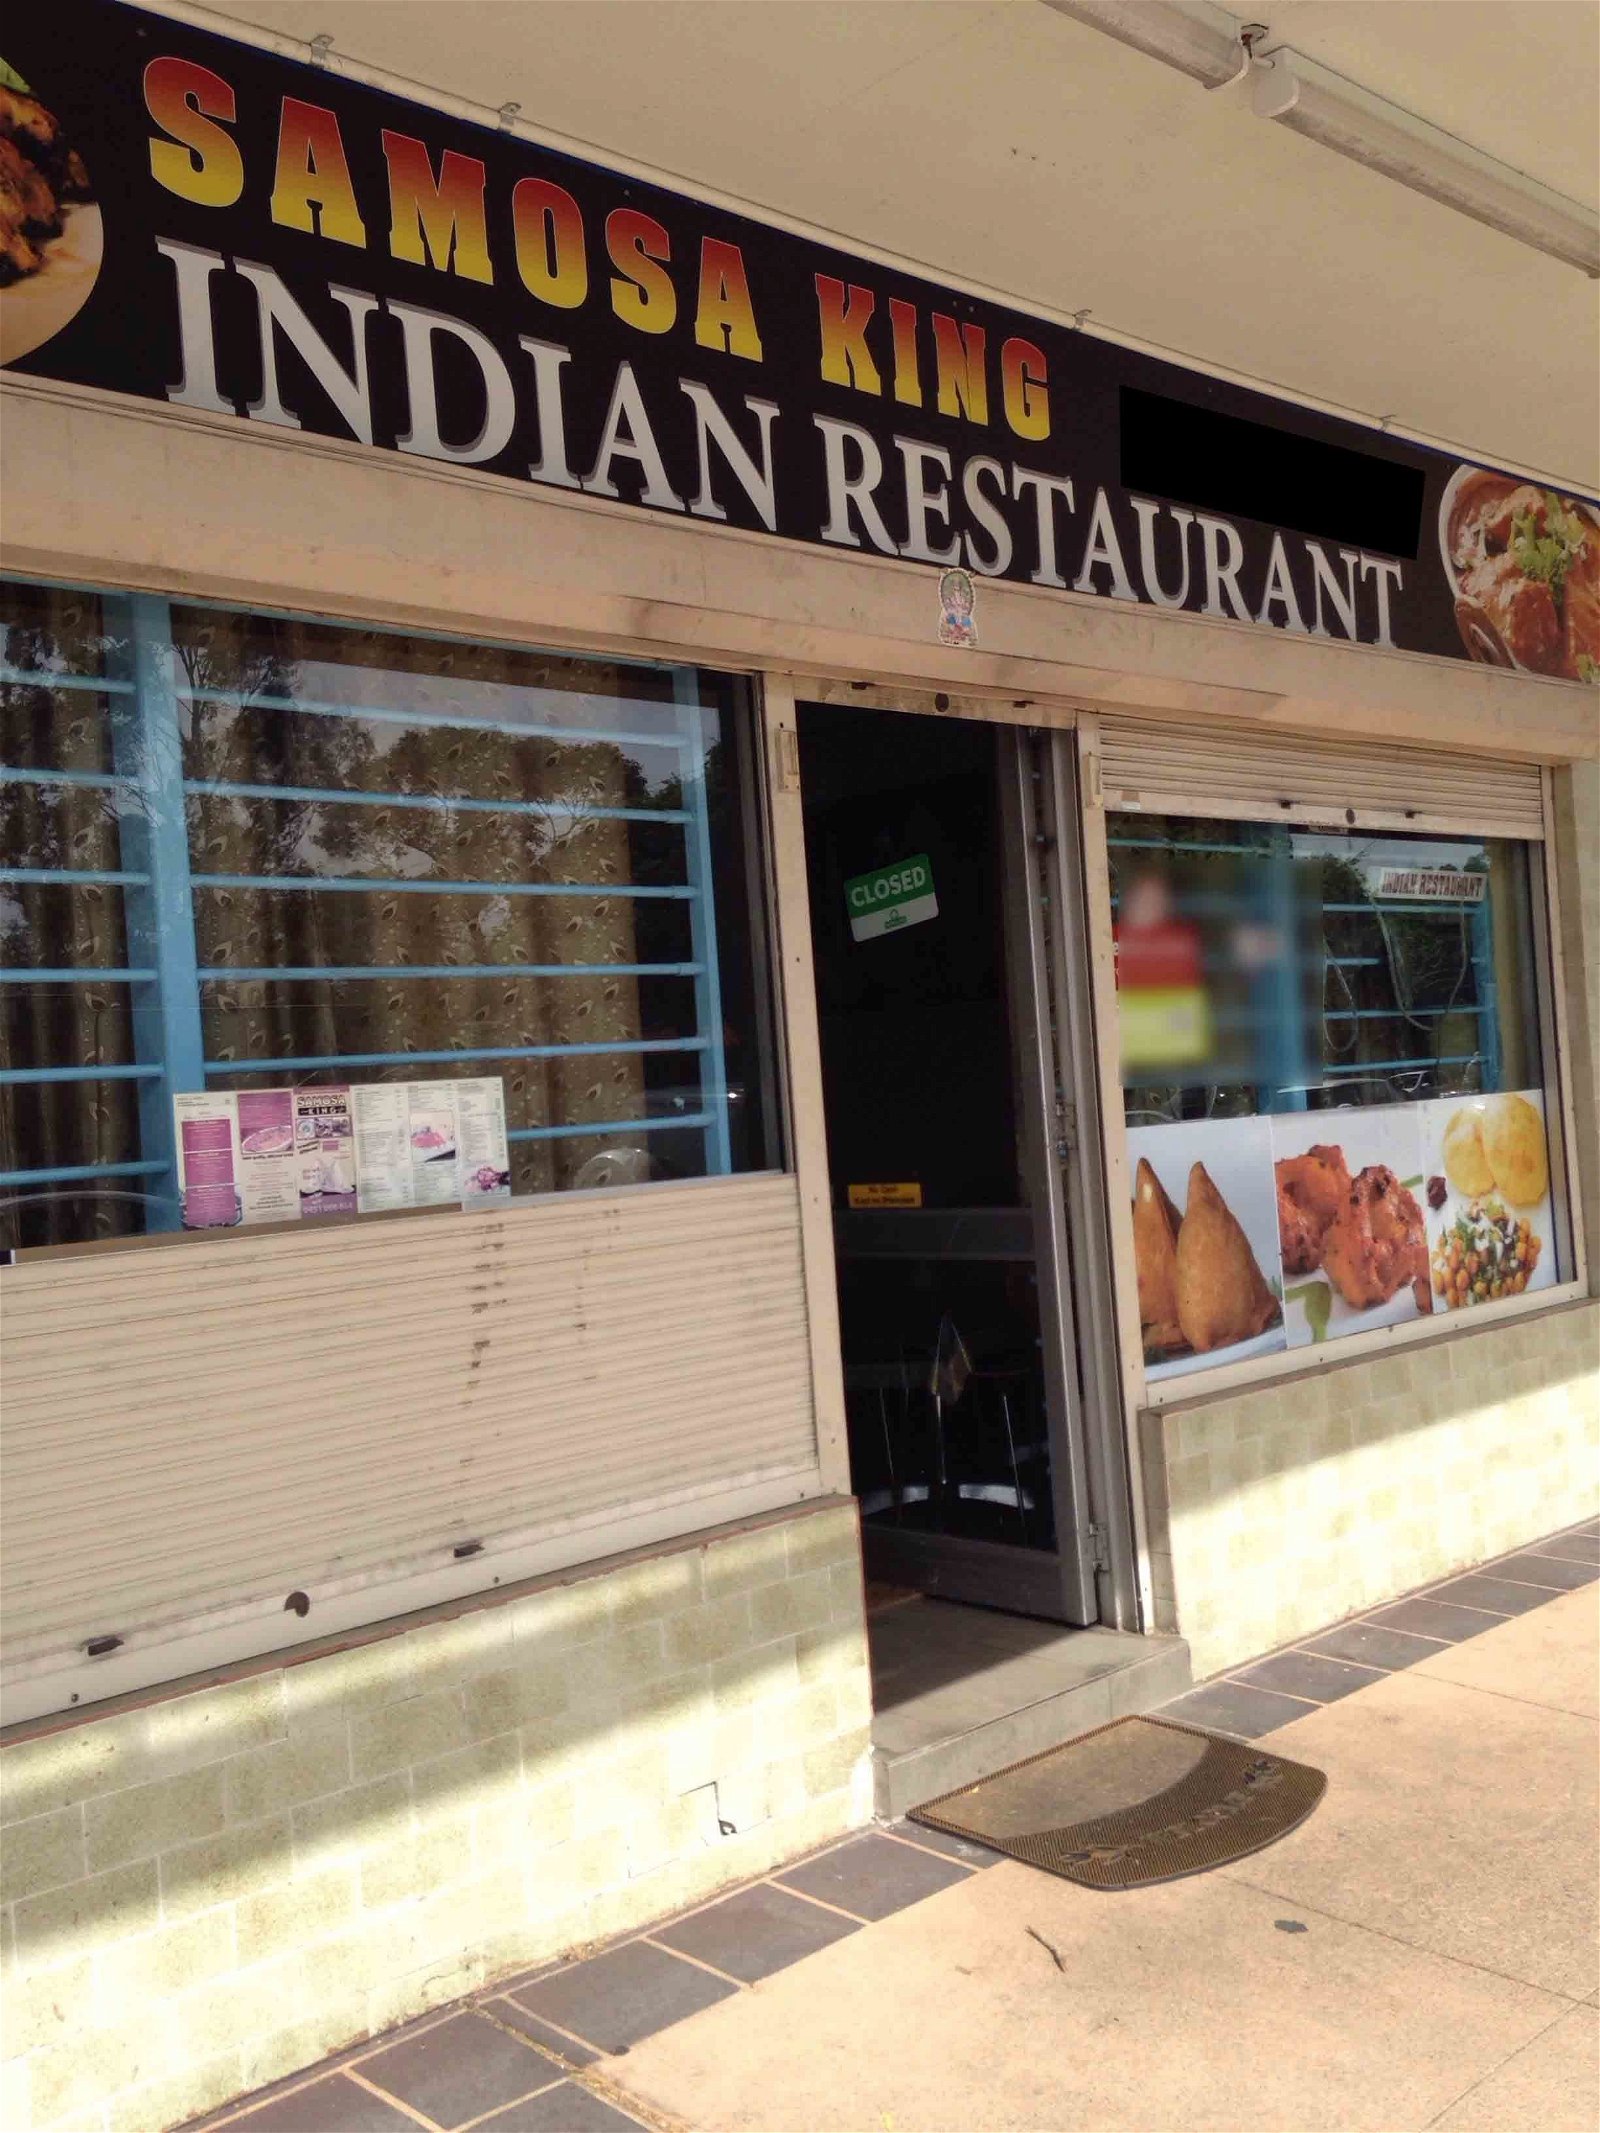 Samosa King Indian Restaurant